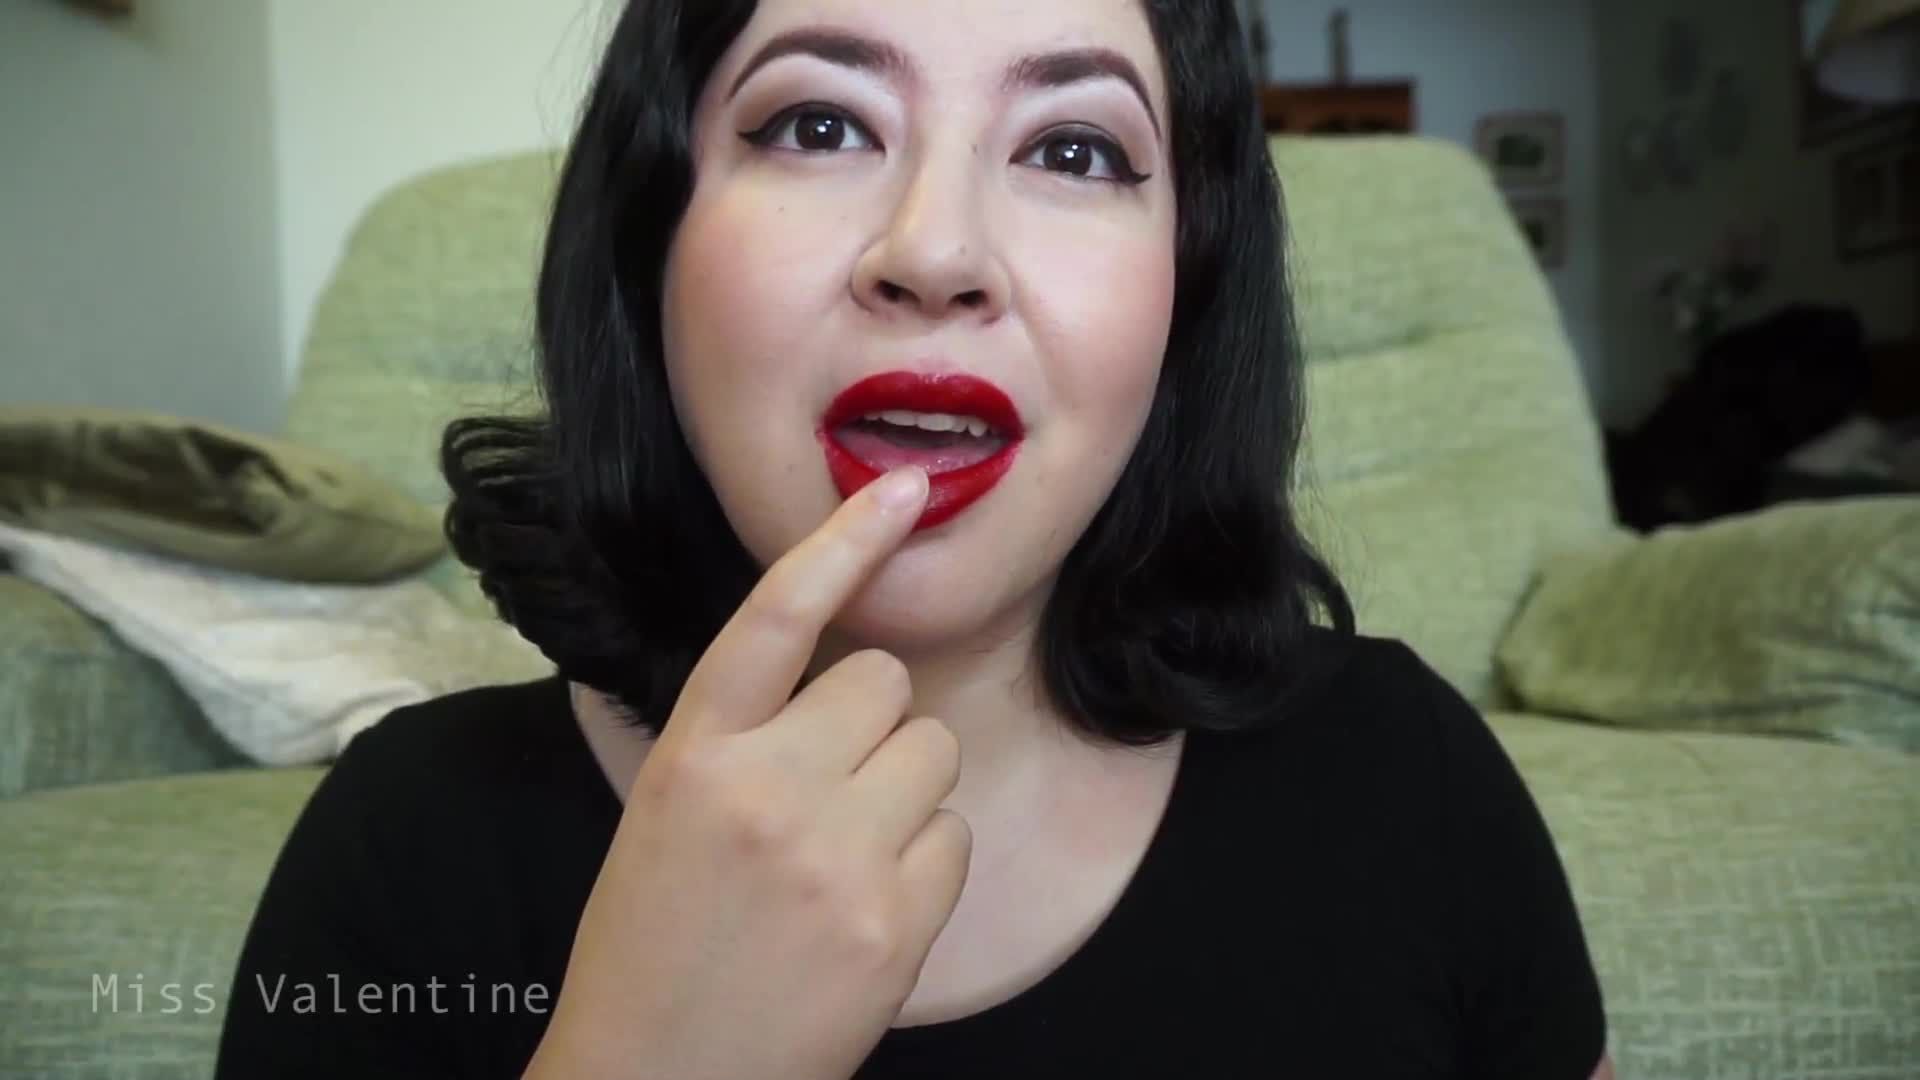 Red lipstick smear